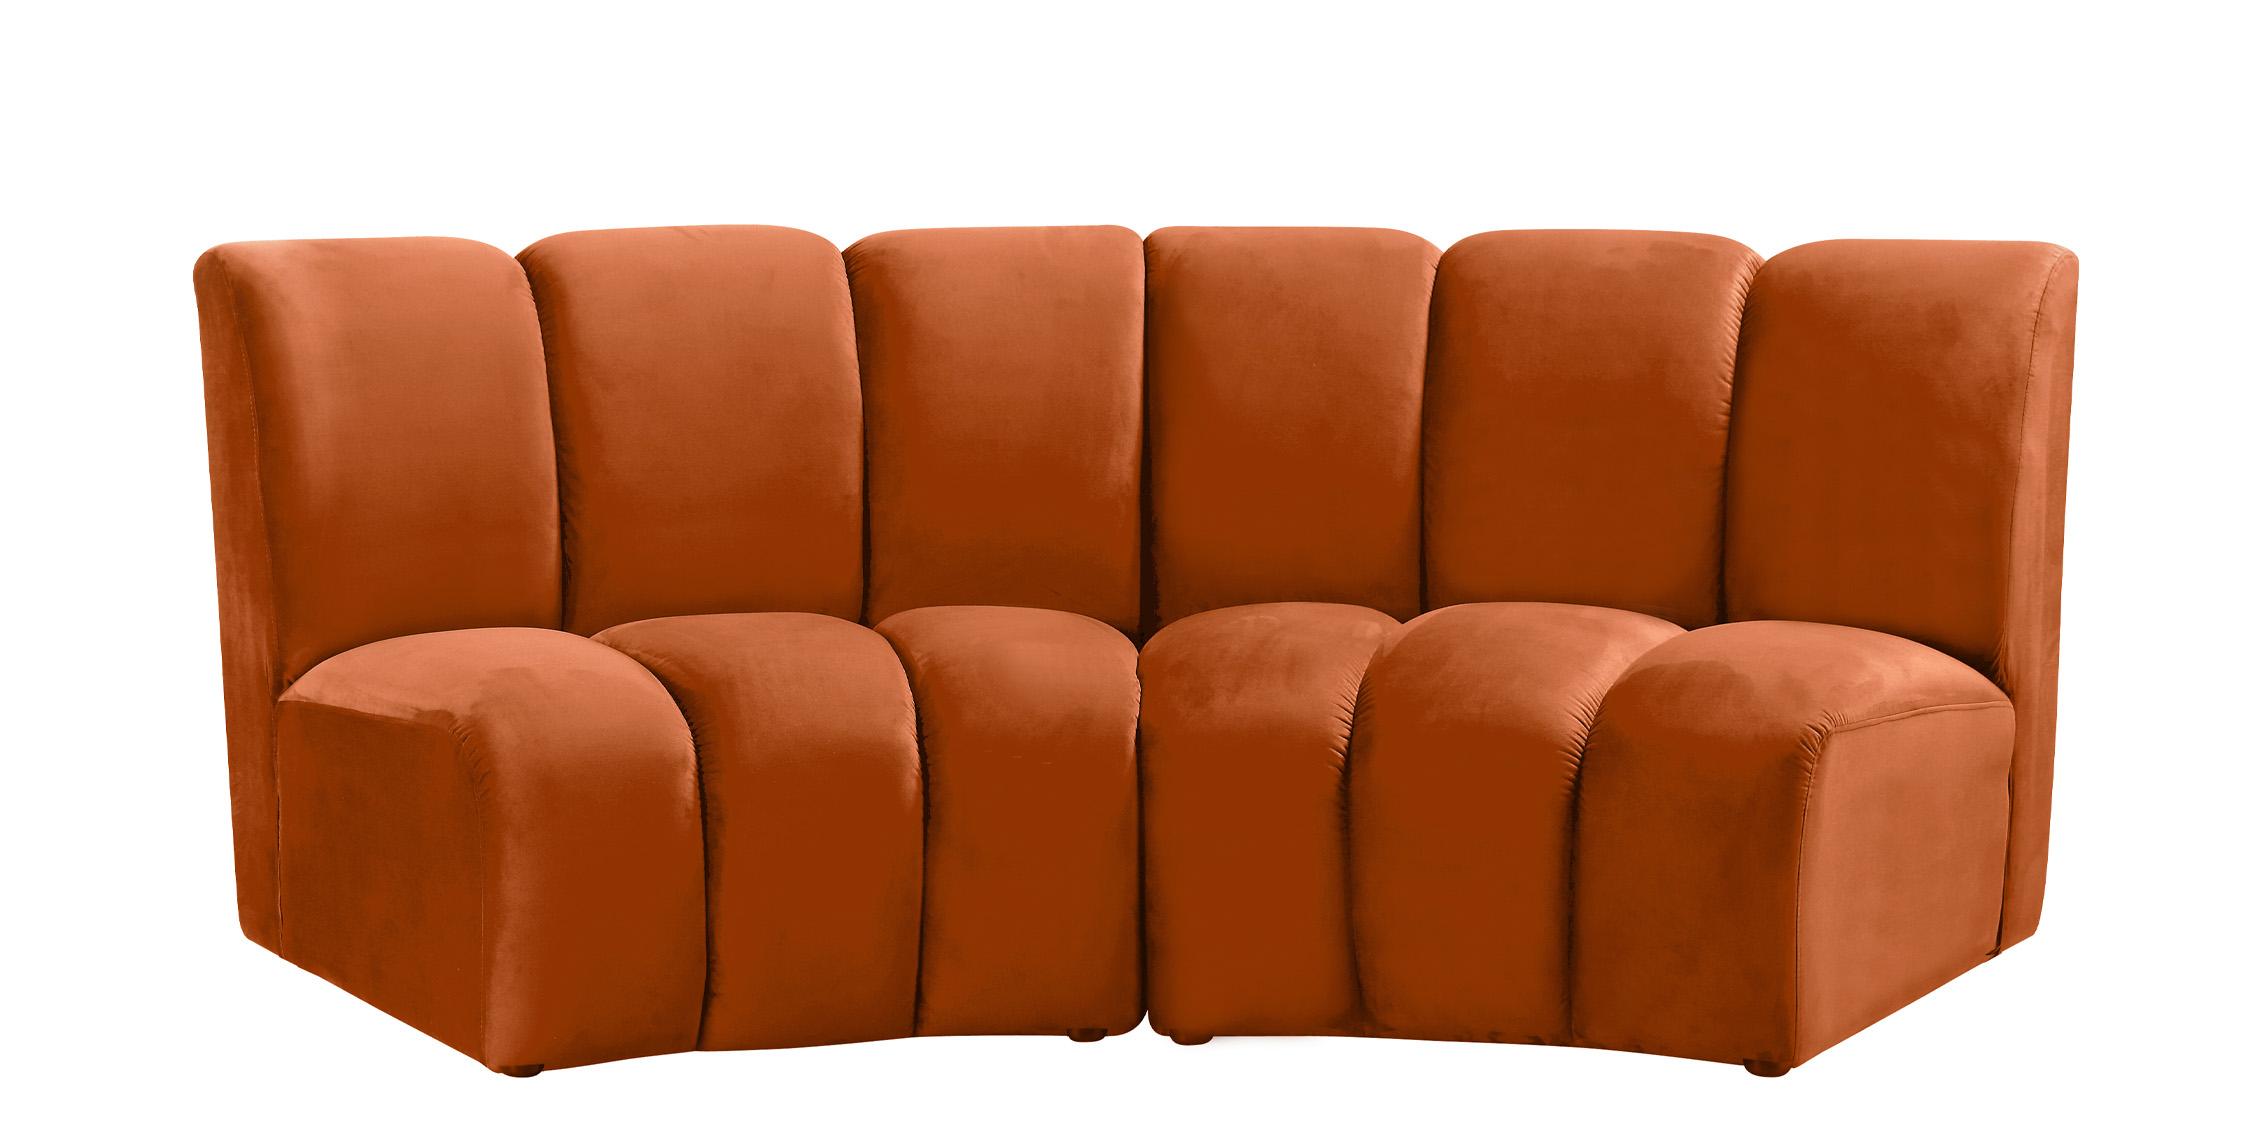 Contemporary, Modern Modular Sectional Sofa INFINITY 638Cognac-2PC 638Cognac-2PC in Cognac Velvet